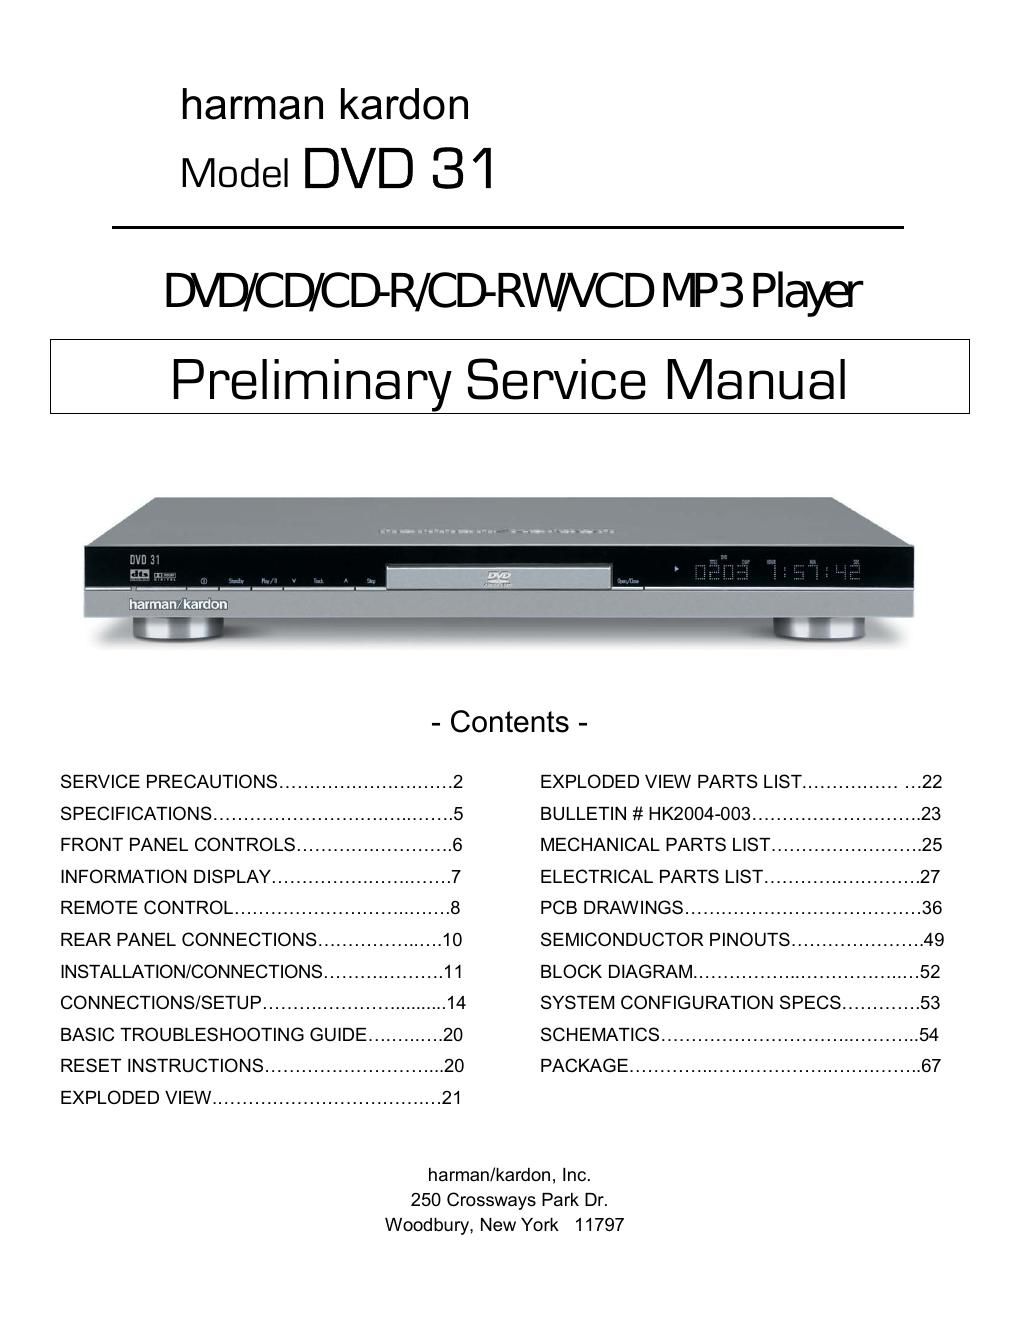 harman kardon dvd 31 service manual